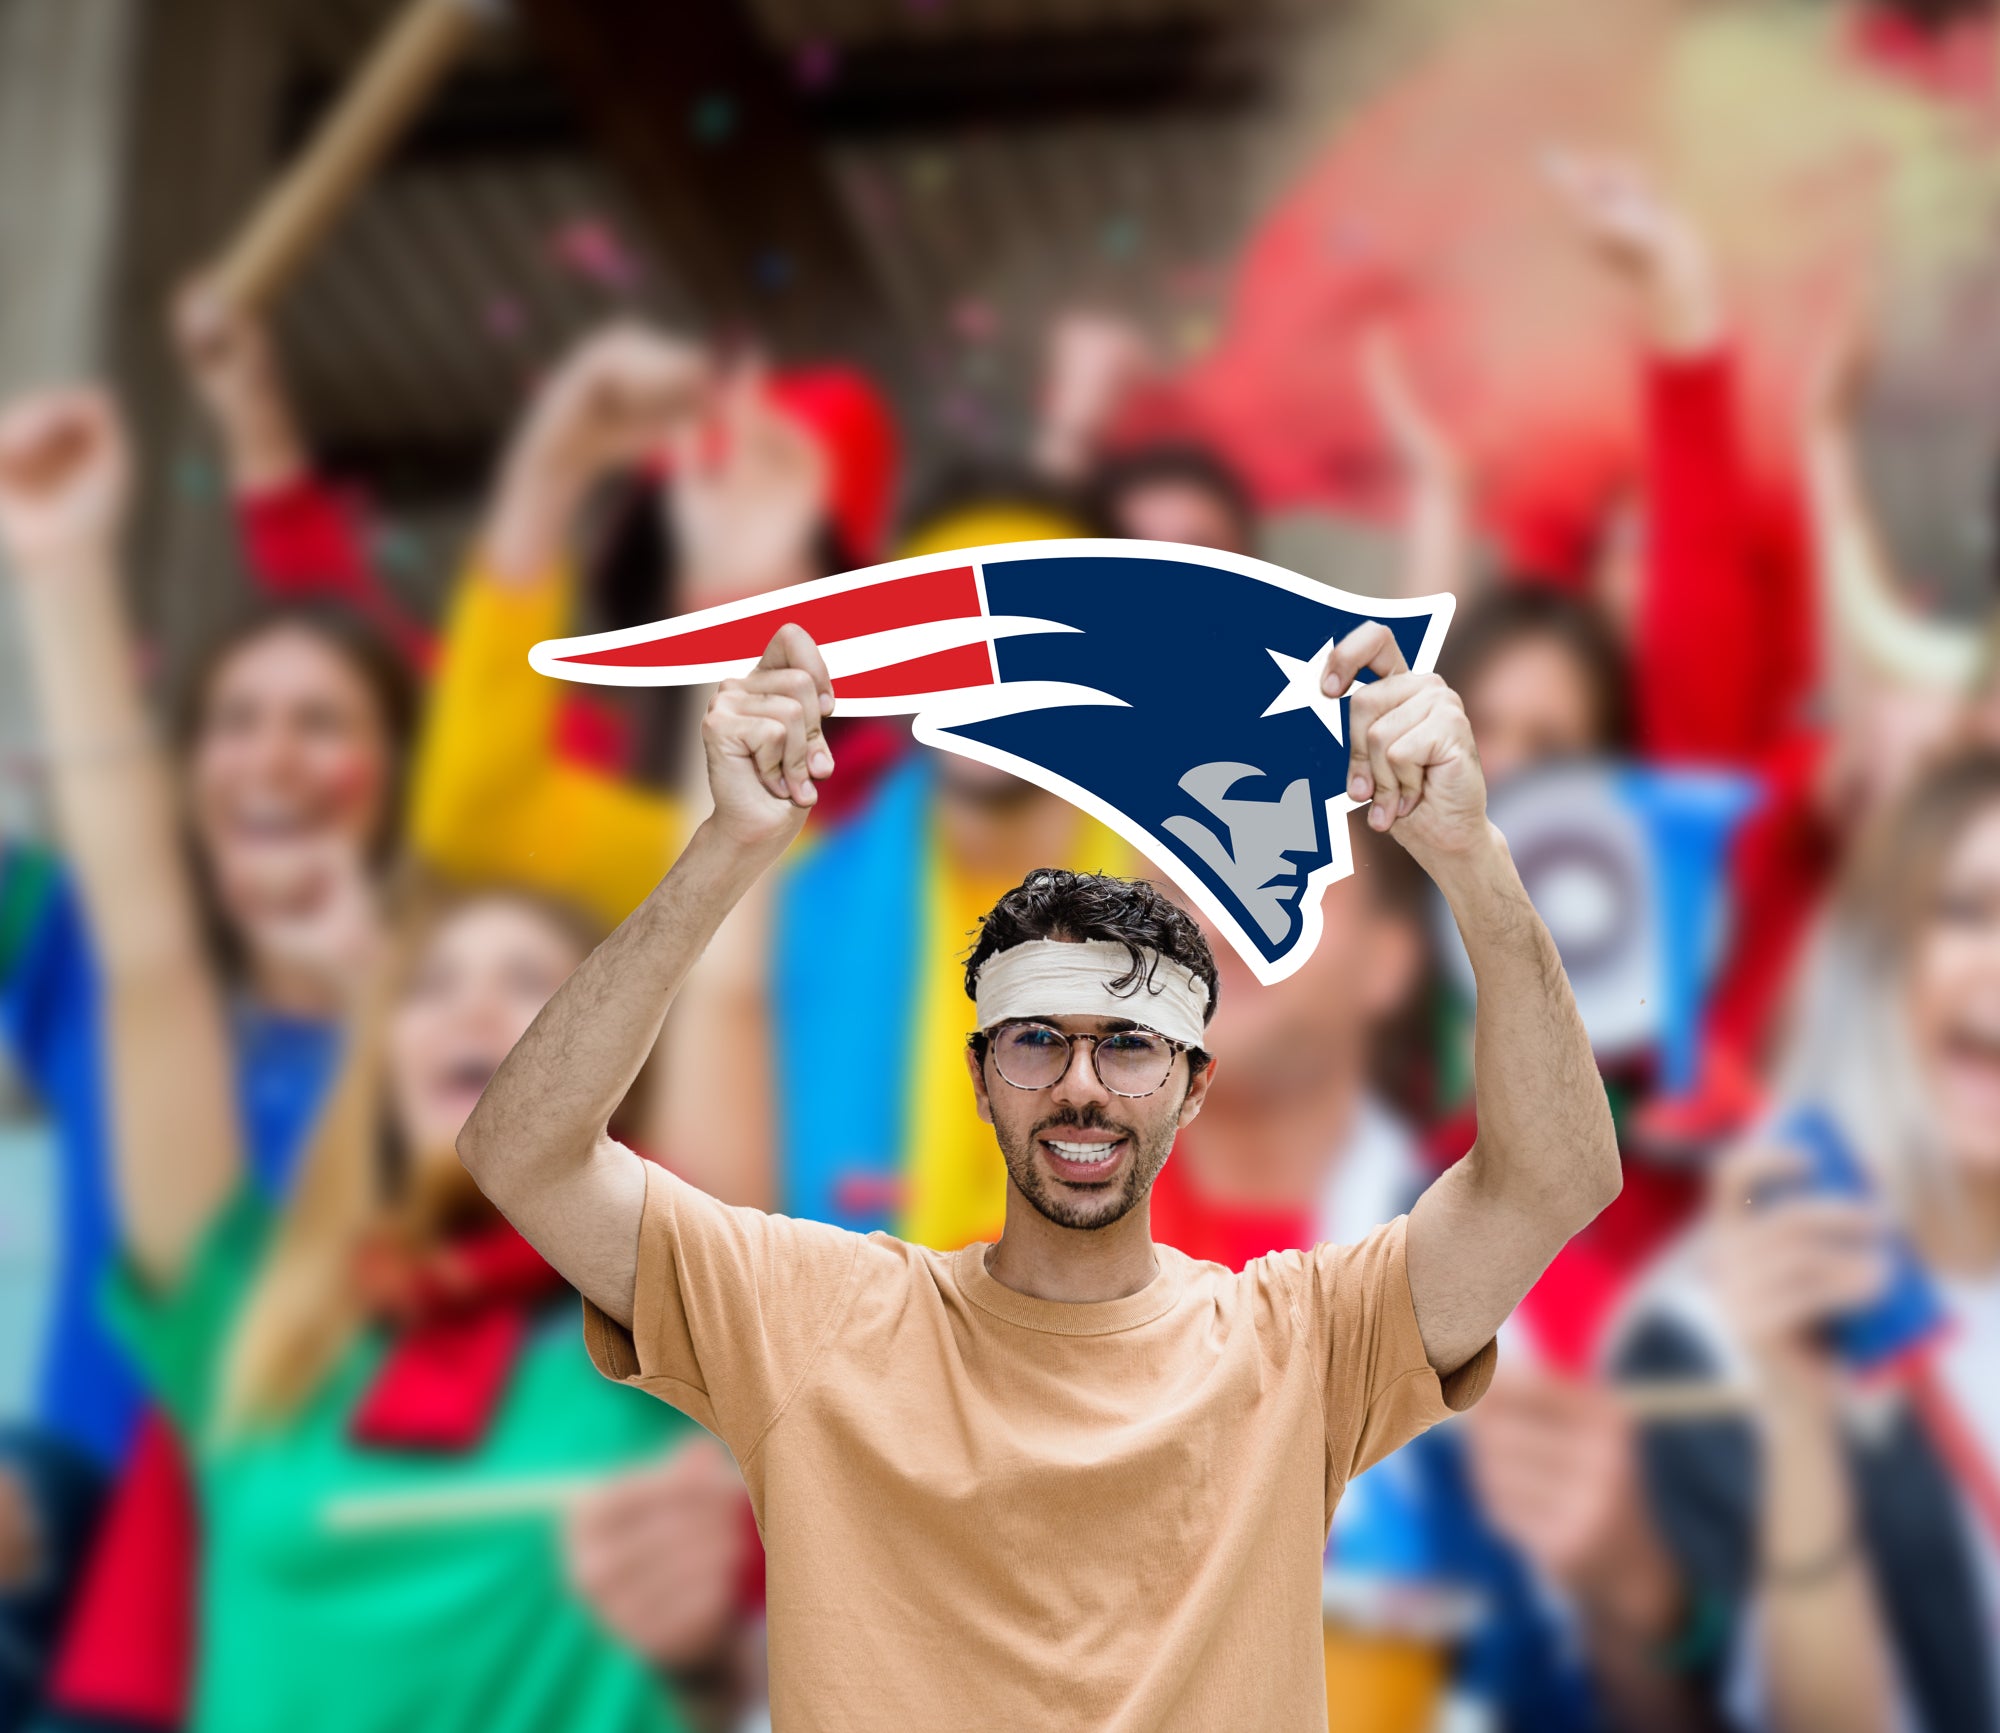 Tom Brady New England Patriots Nike Super Bowl LIII Bound Game Jersey - Red